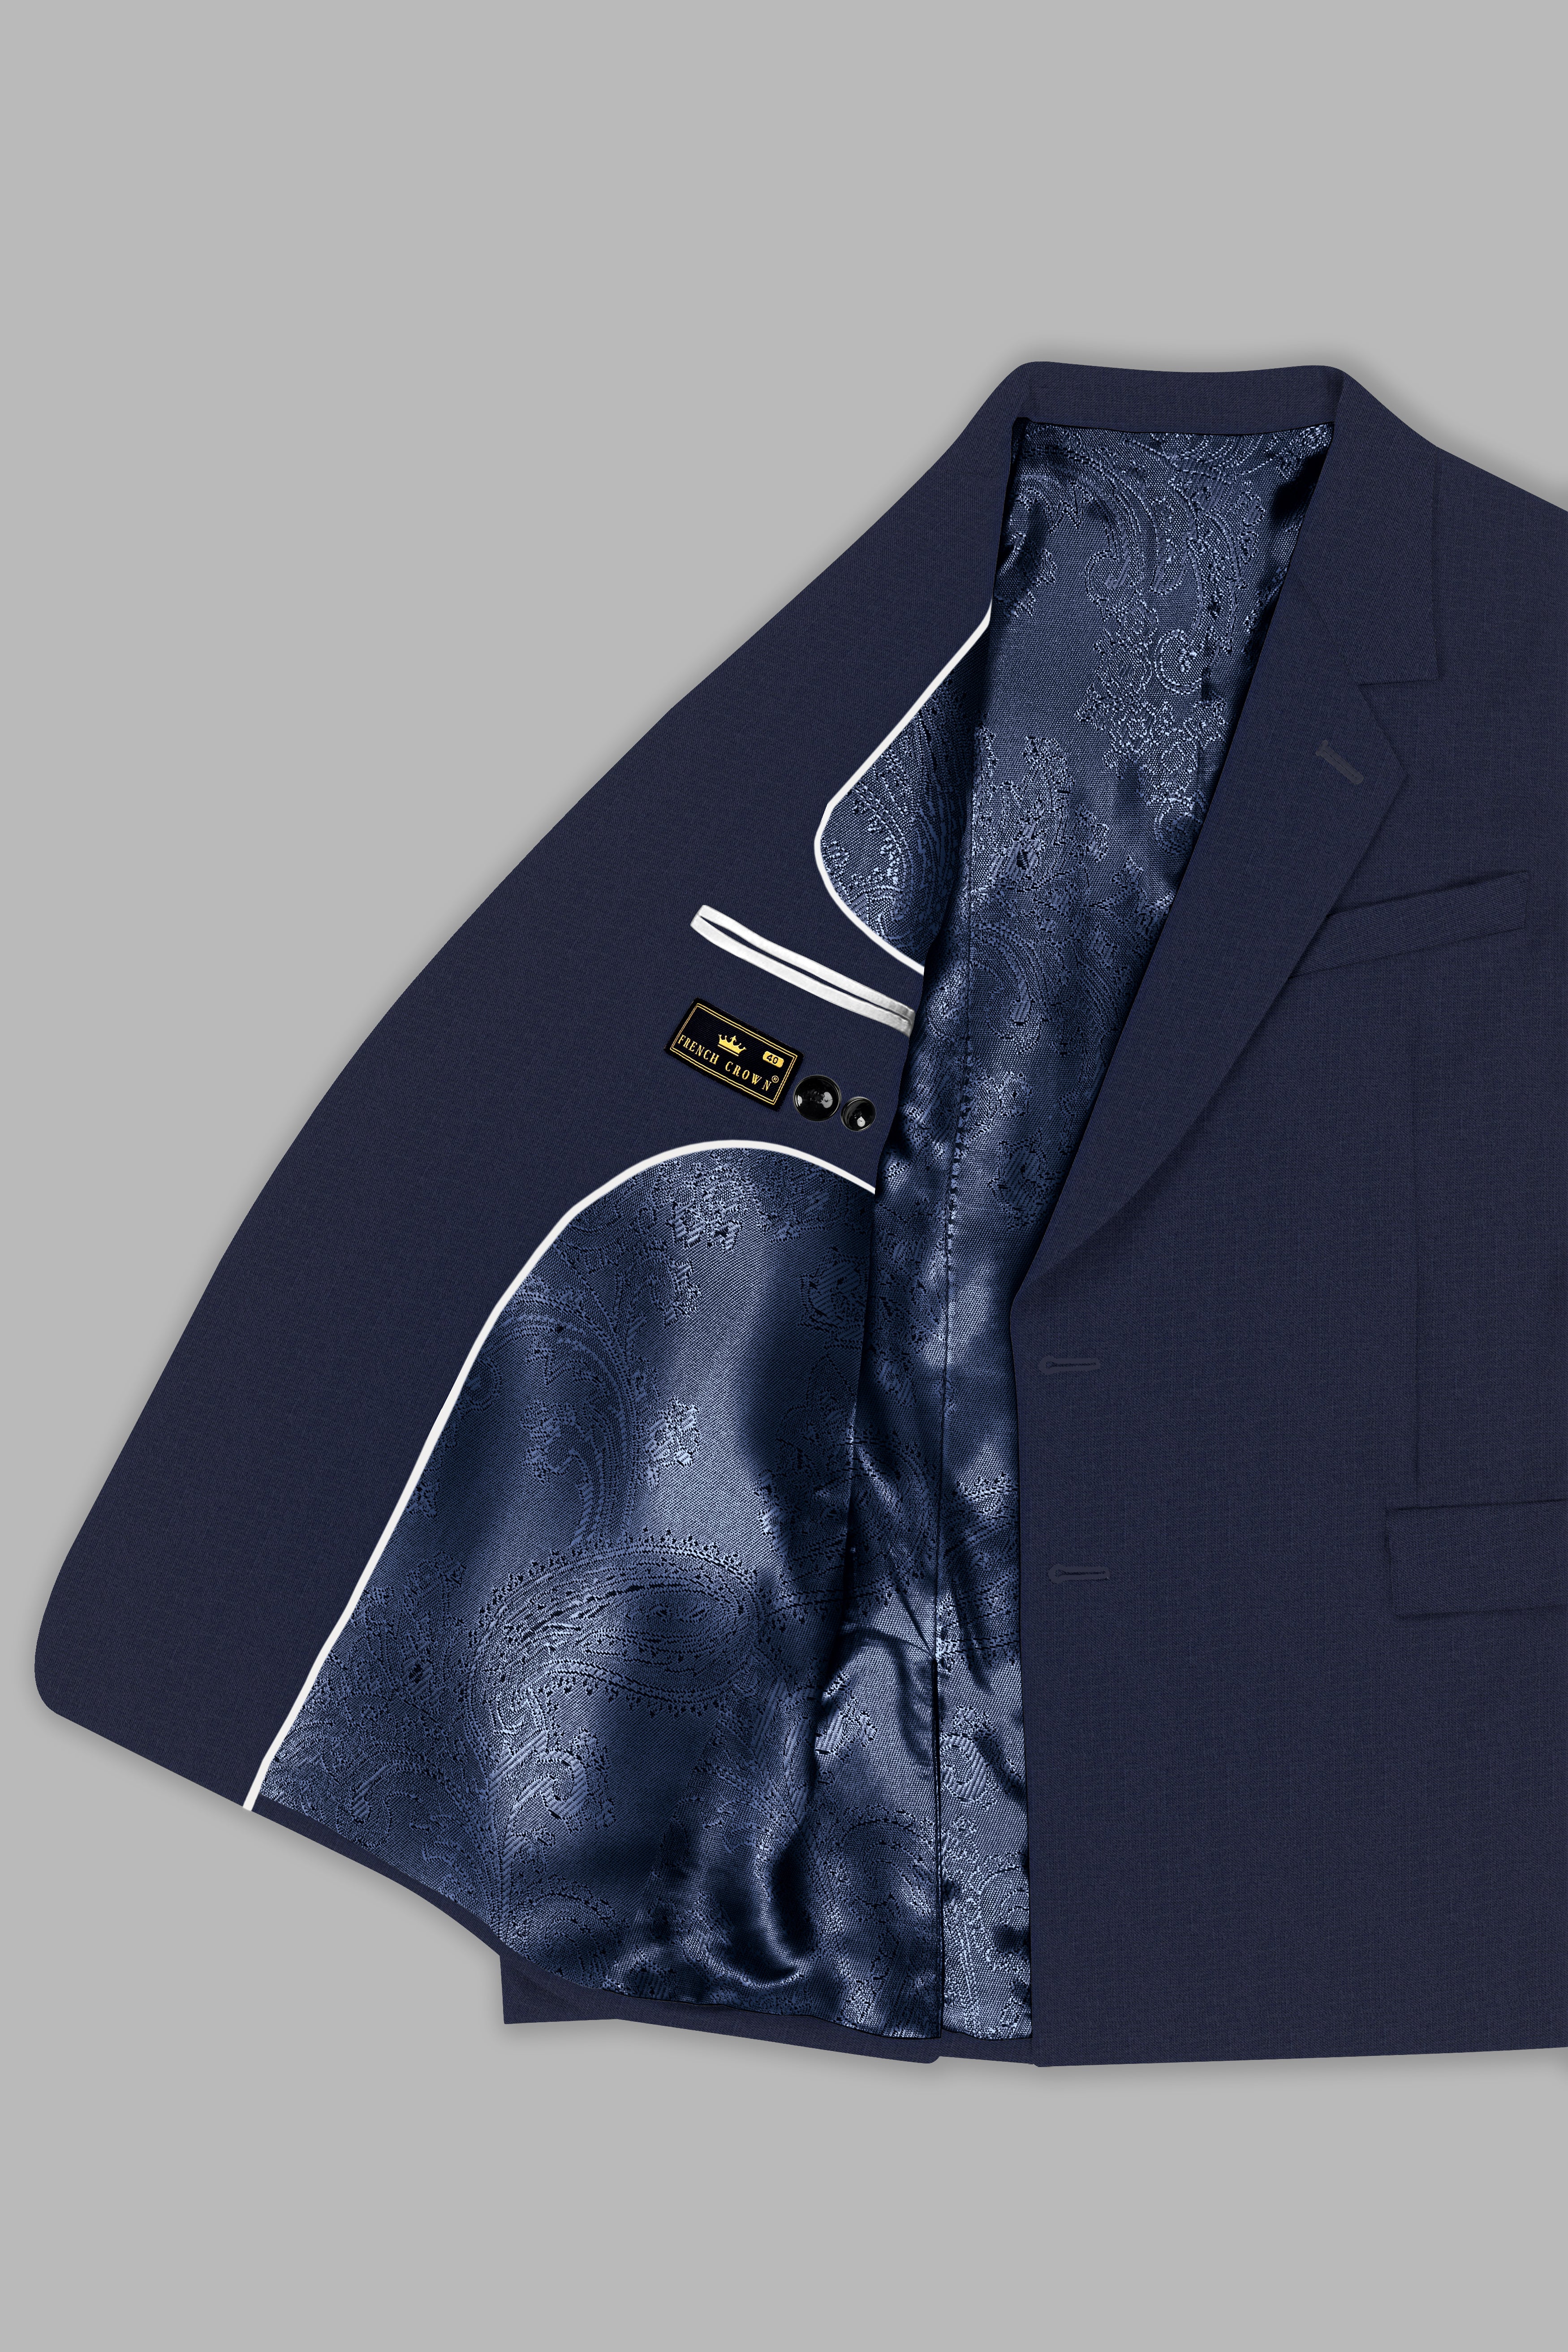 Tealish Blue Hand Painted Subtle Sheen Wool Blend Suit